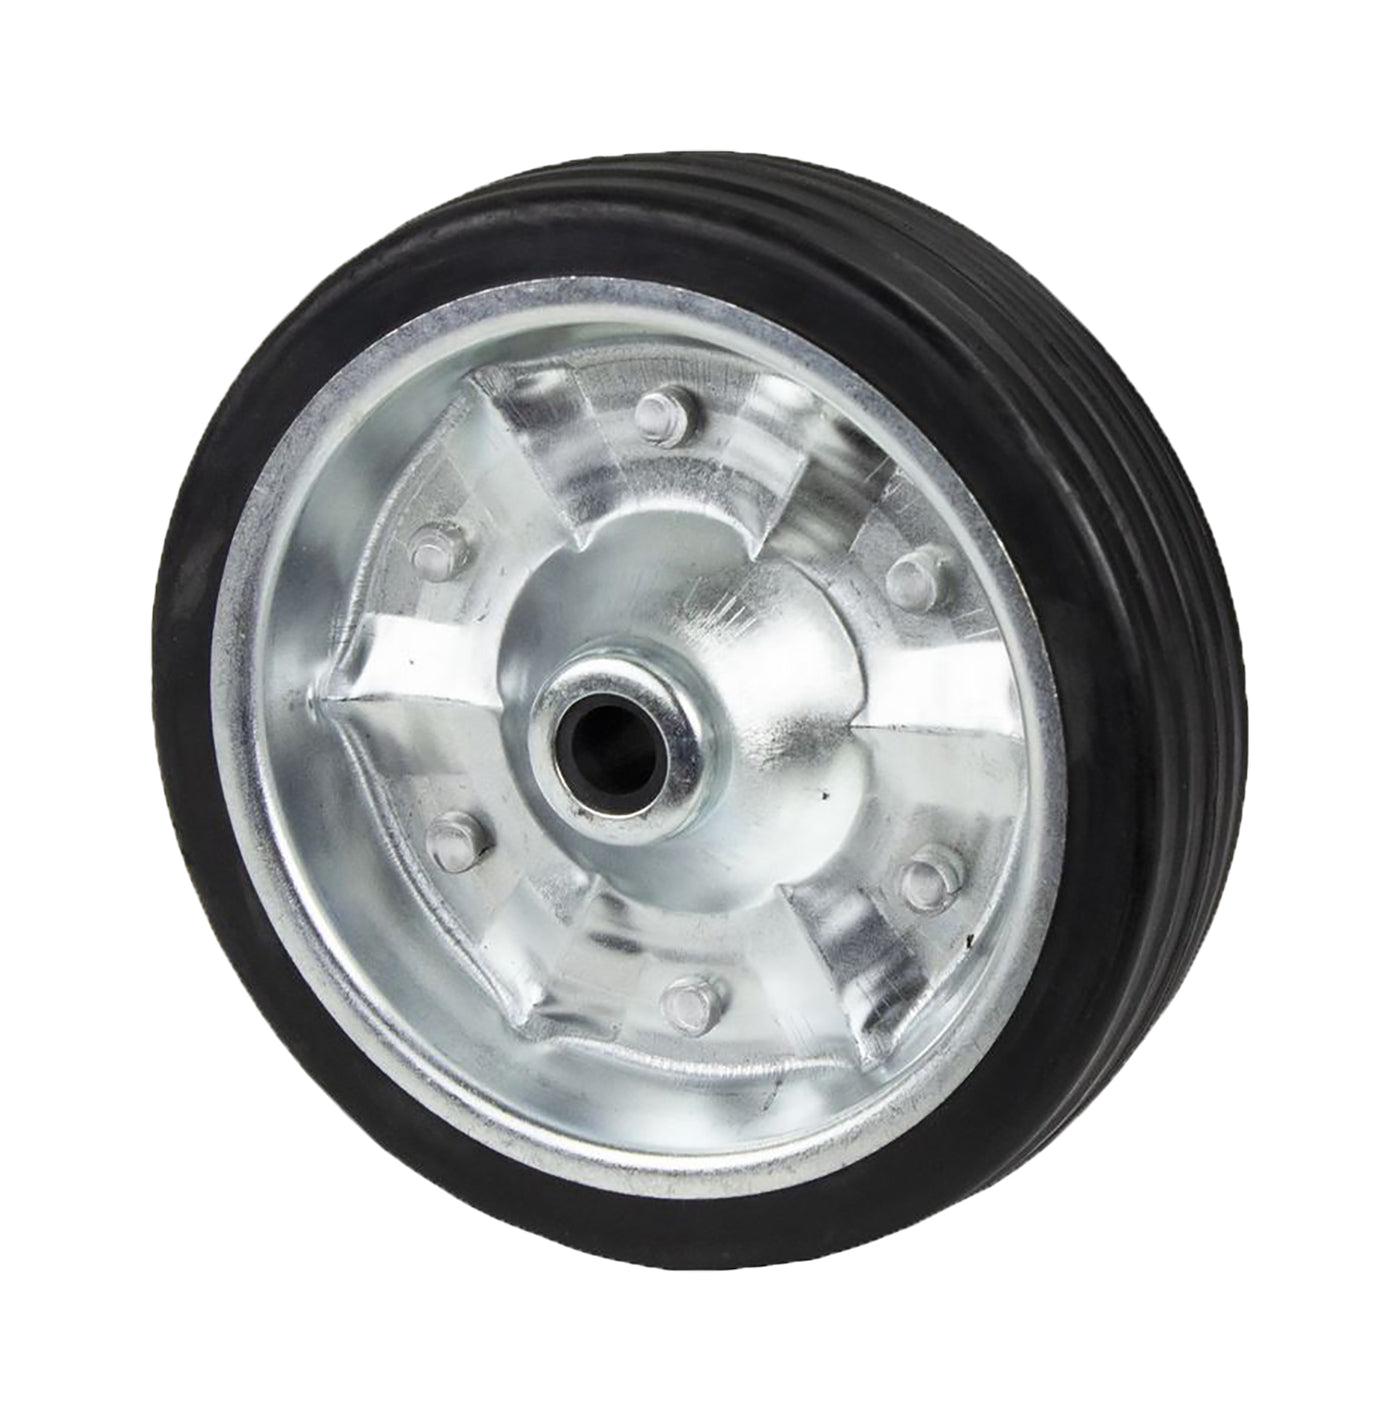 8 inch Replacement Rubber Wheel For Jockey Wheel Solid Rubber Trailer Caravan